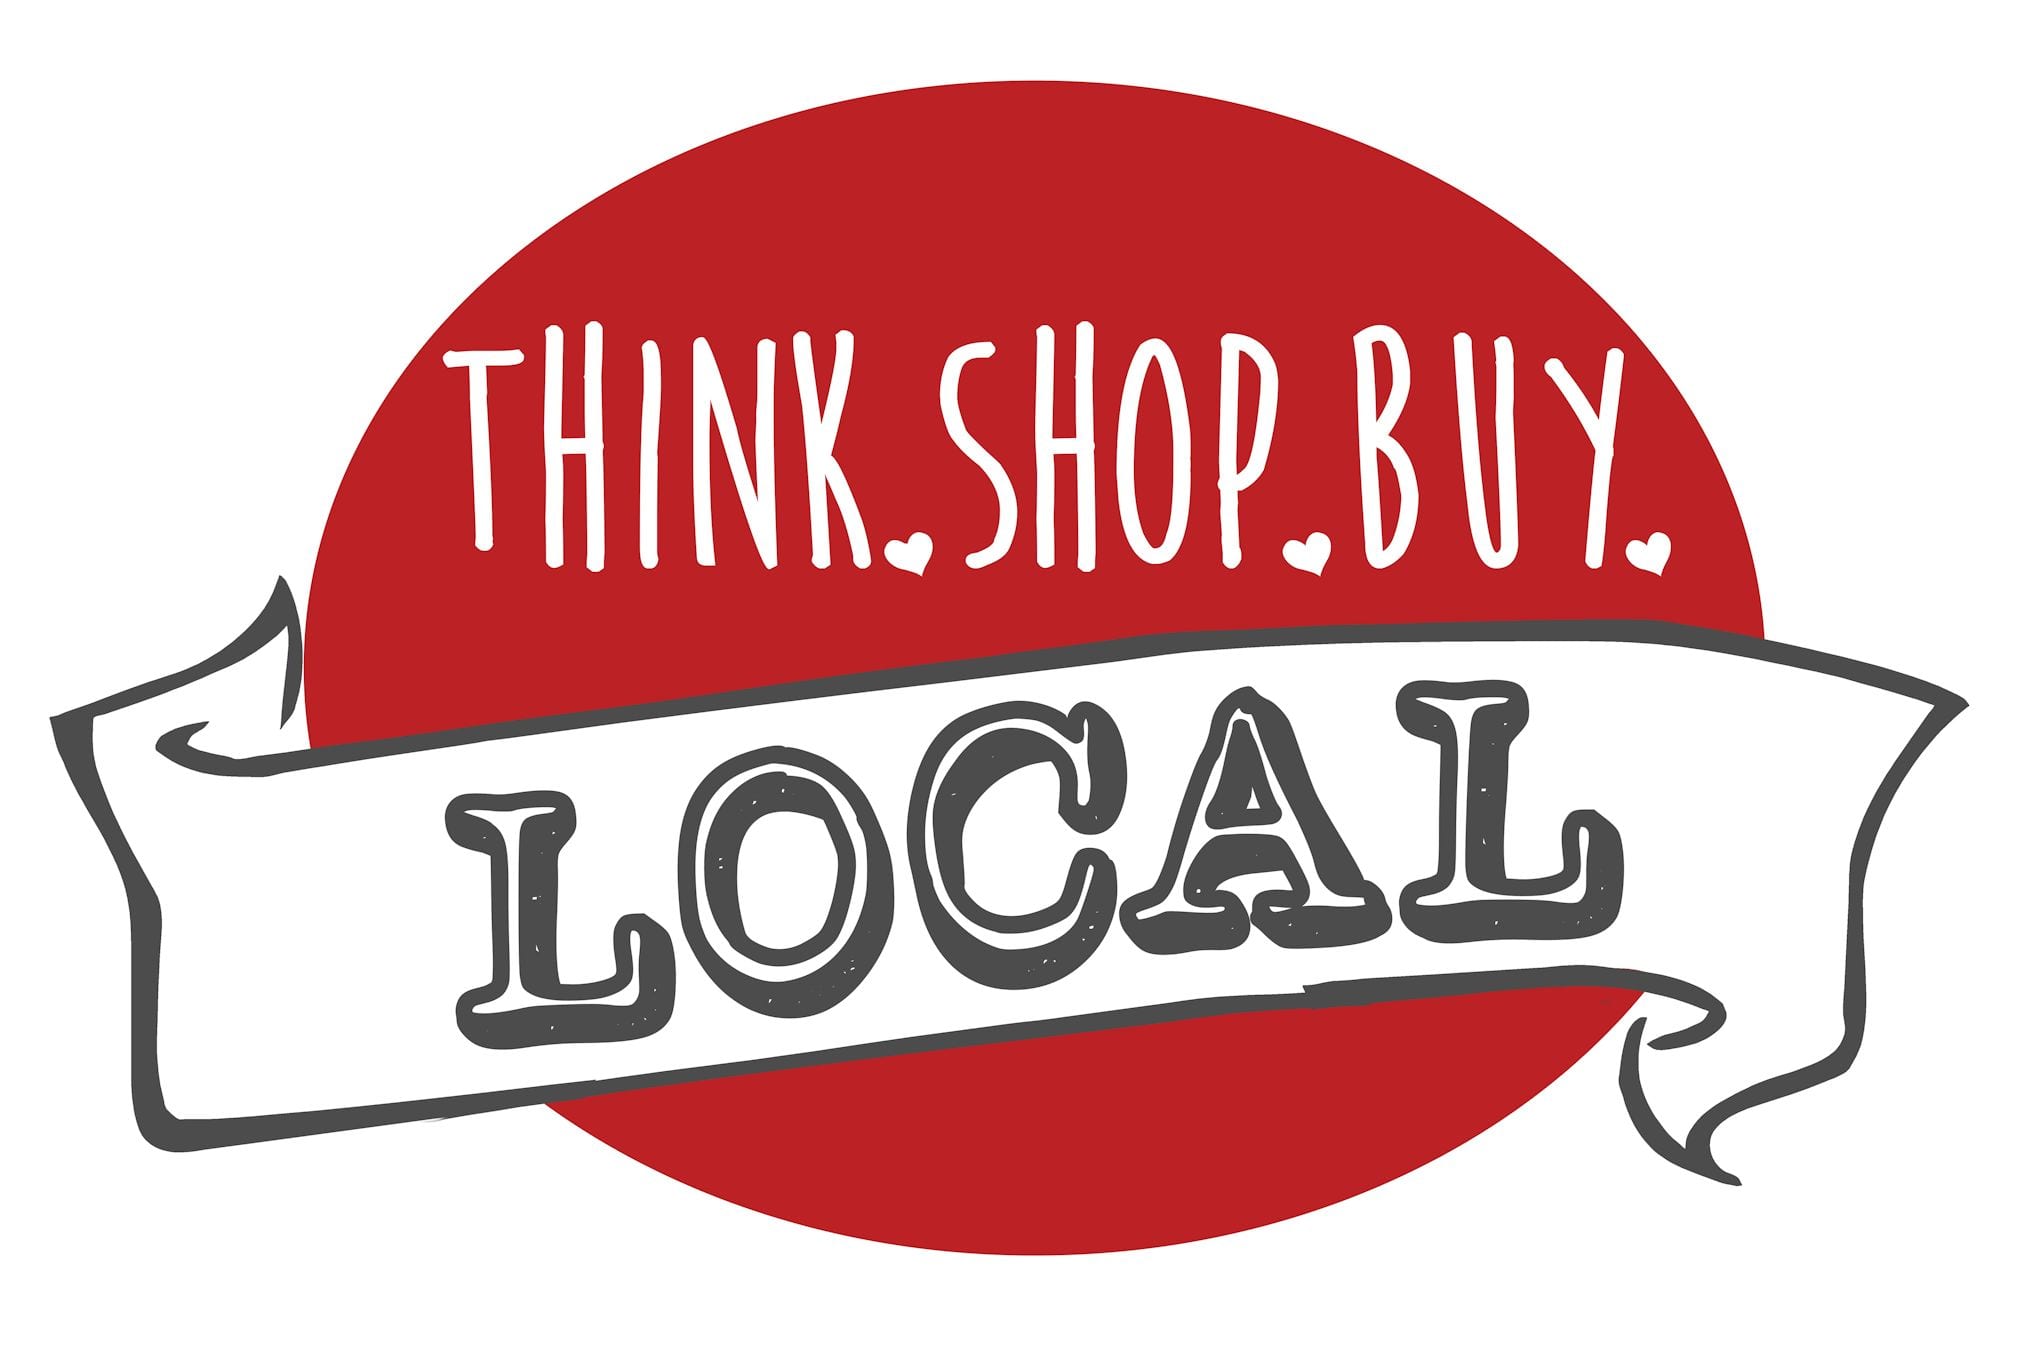 Think Shop Buy Local